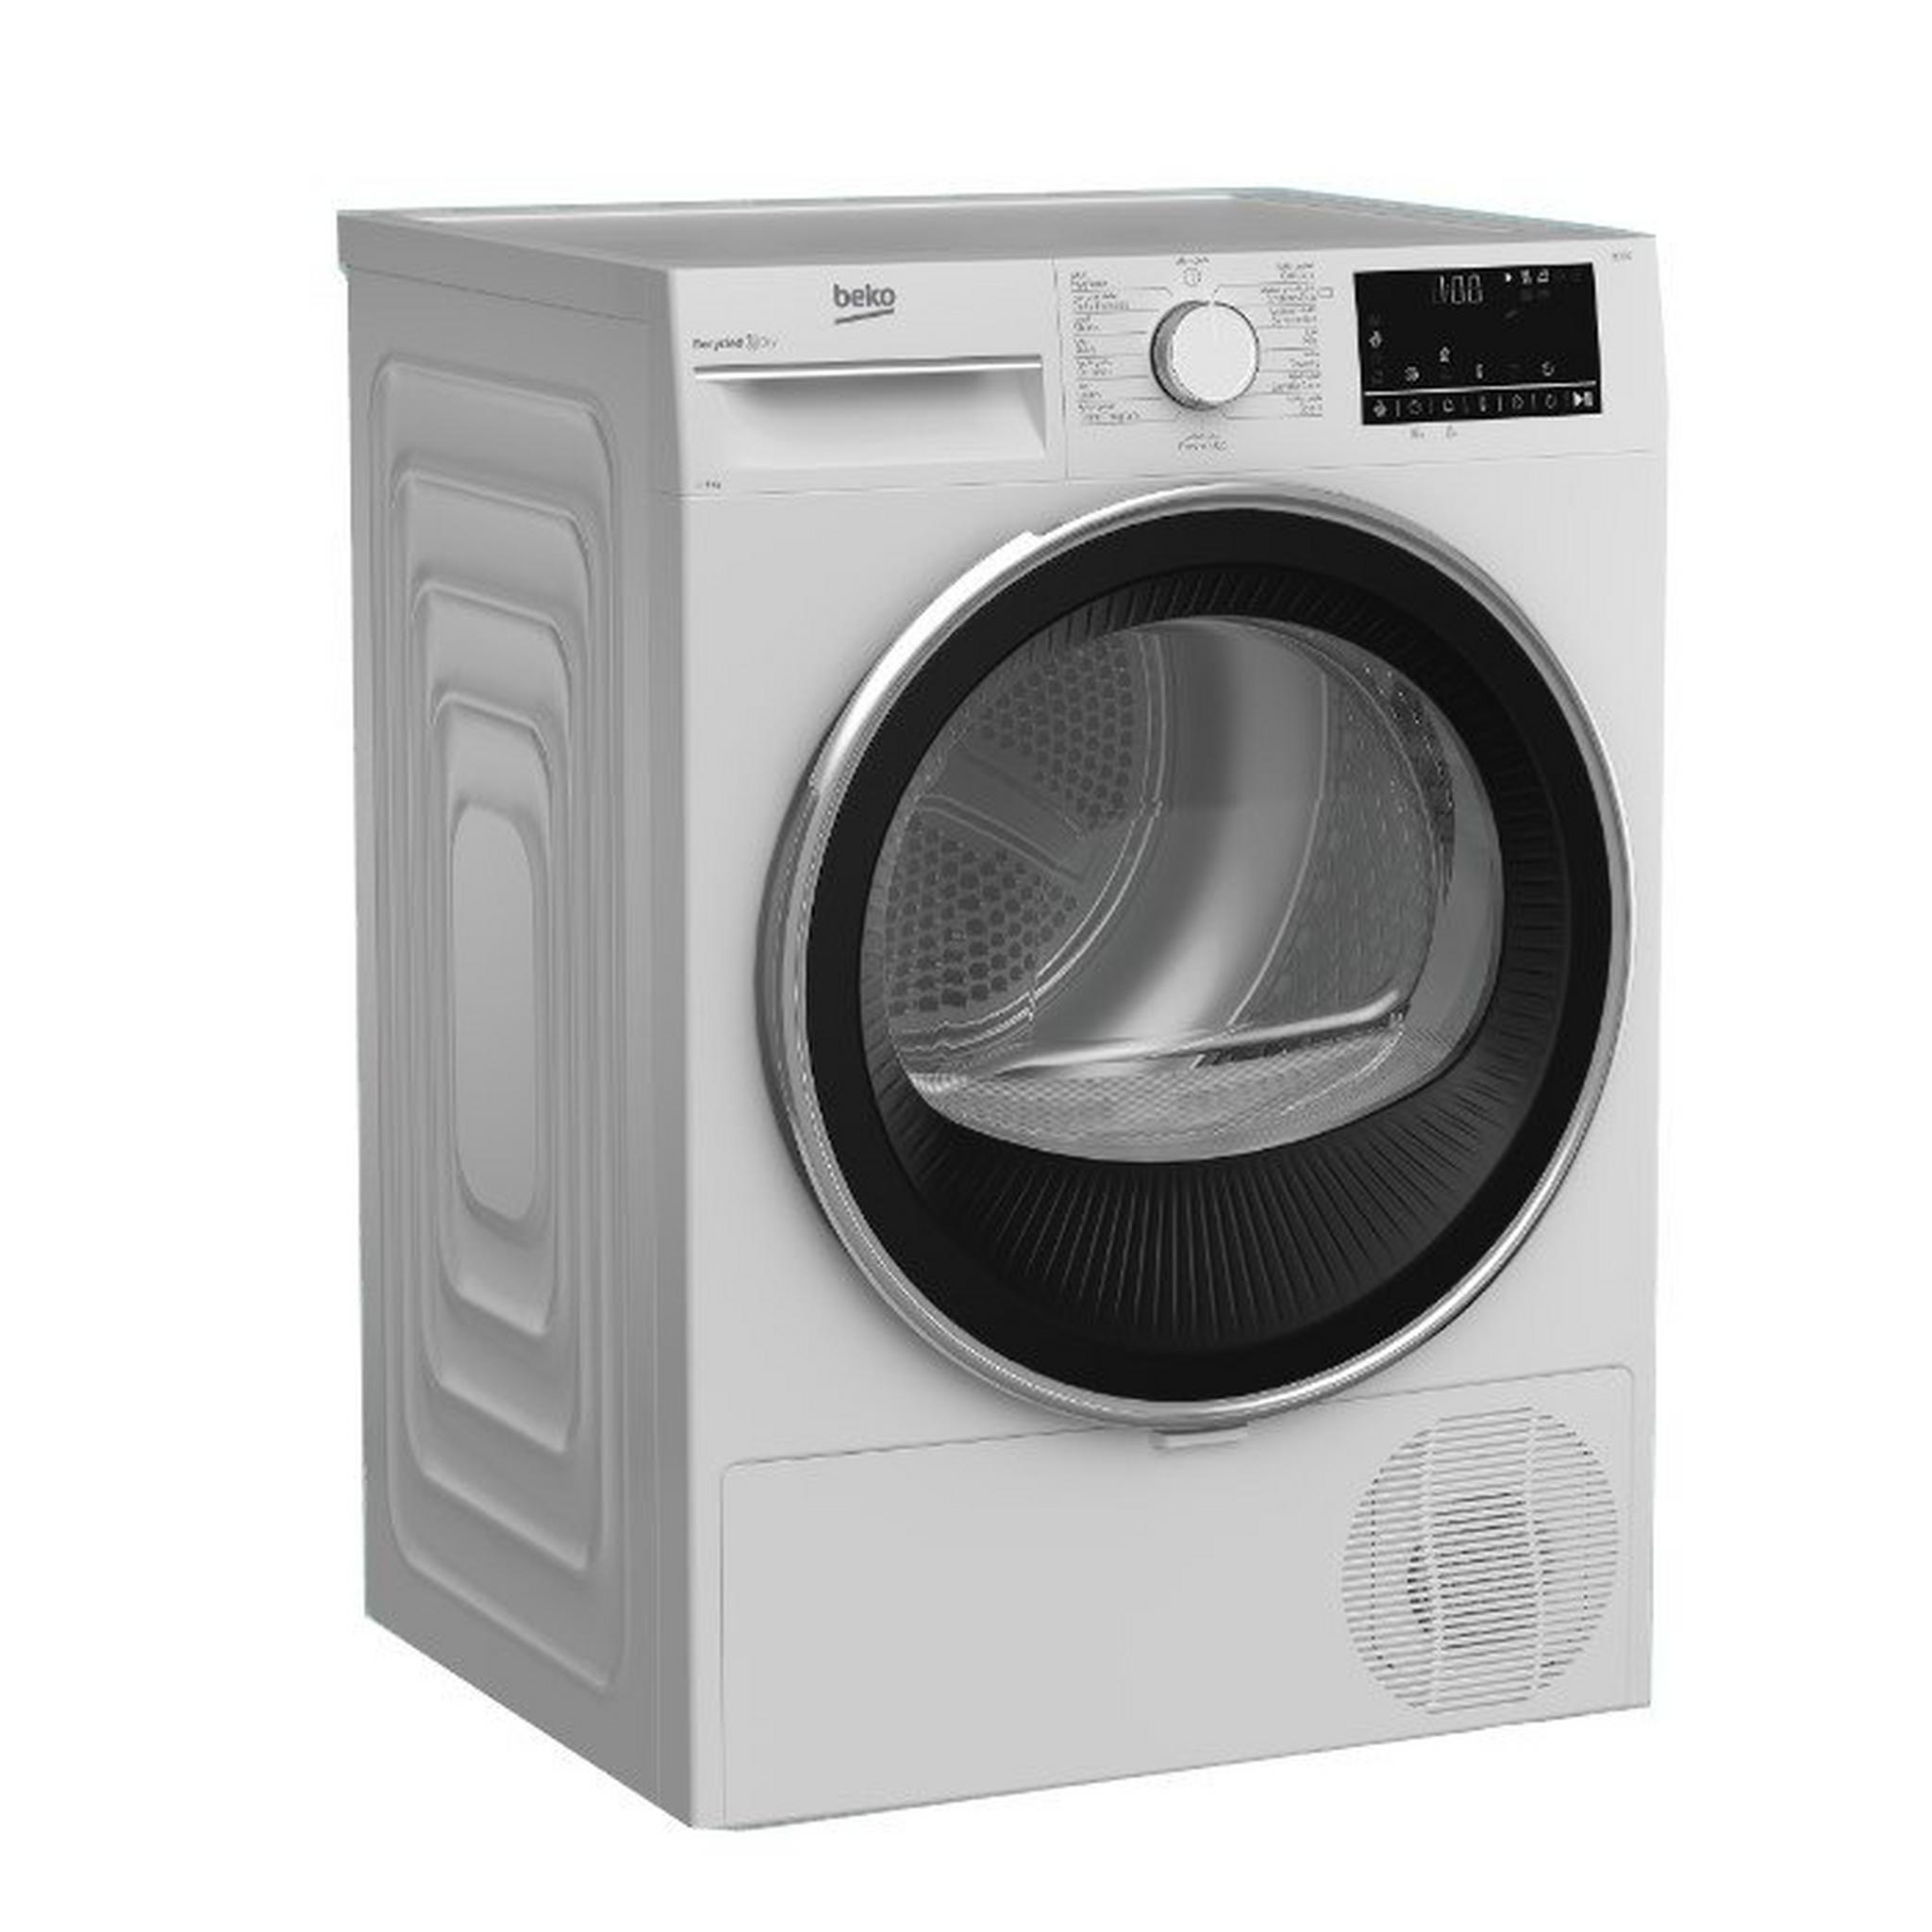 BEKO Front Load Condenser Dryer, 9 KG Capacity, 16 Programs, DC9W – White